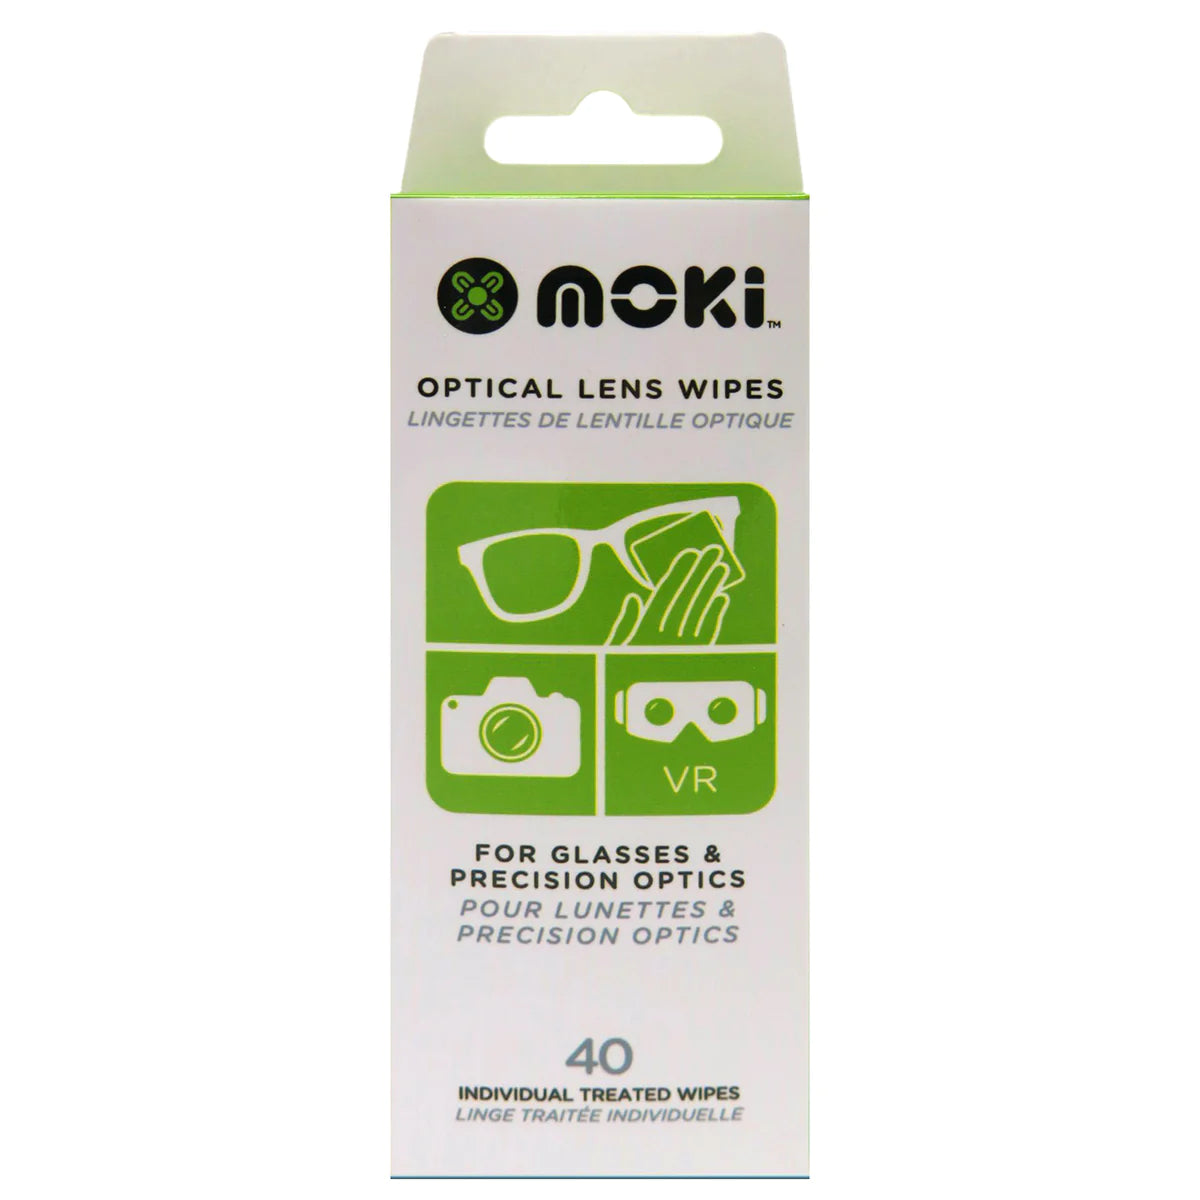 Moki Optical Lens Wipes 40 pack